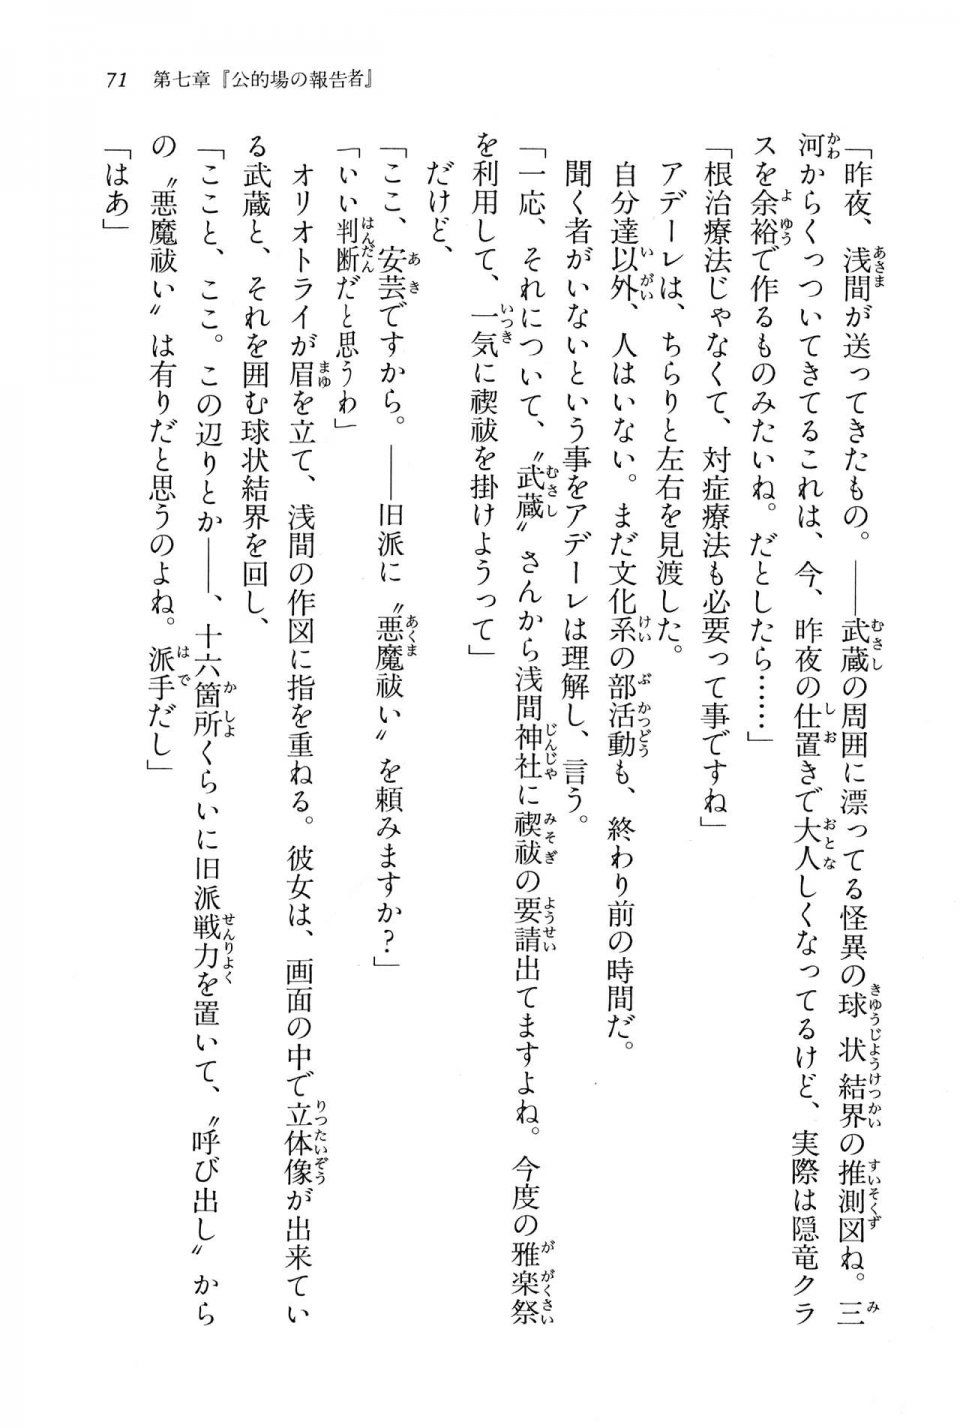 Kyoukai Senjou no Horizon BD Special Mininovel Vol 6(3B) - Photo #75